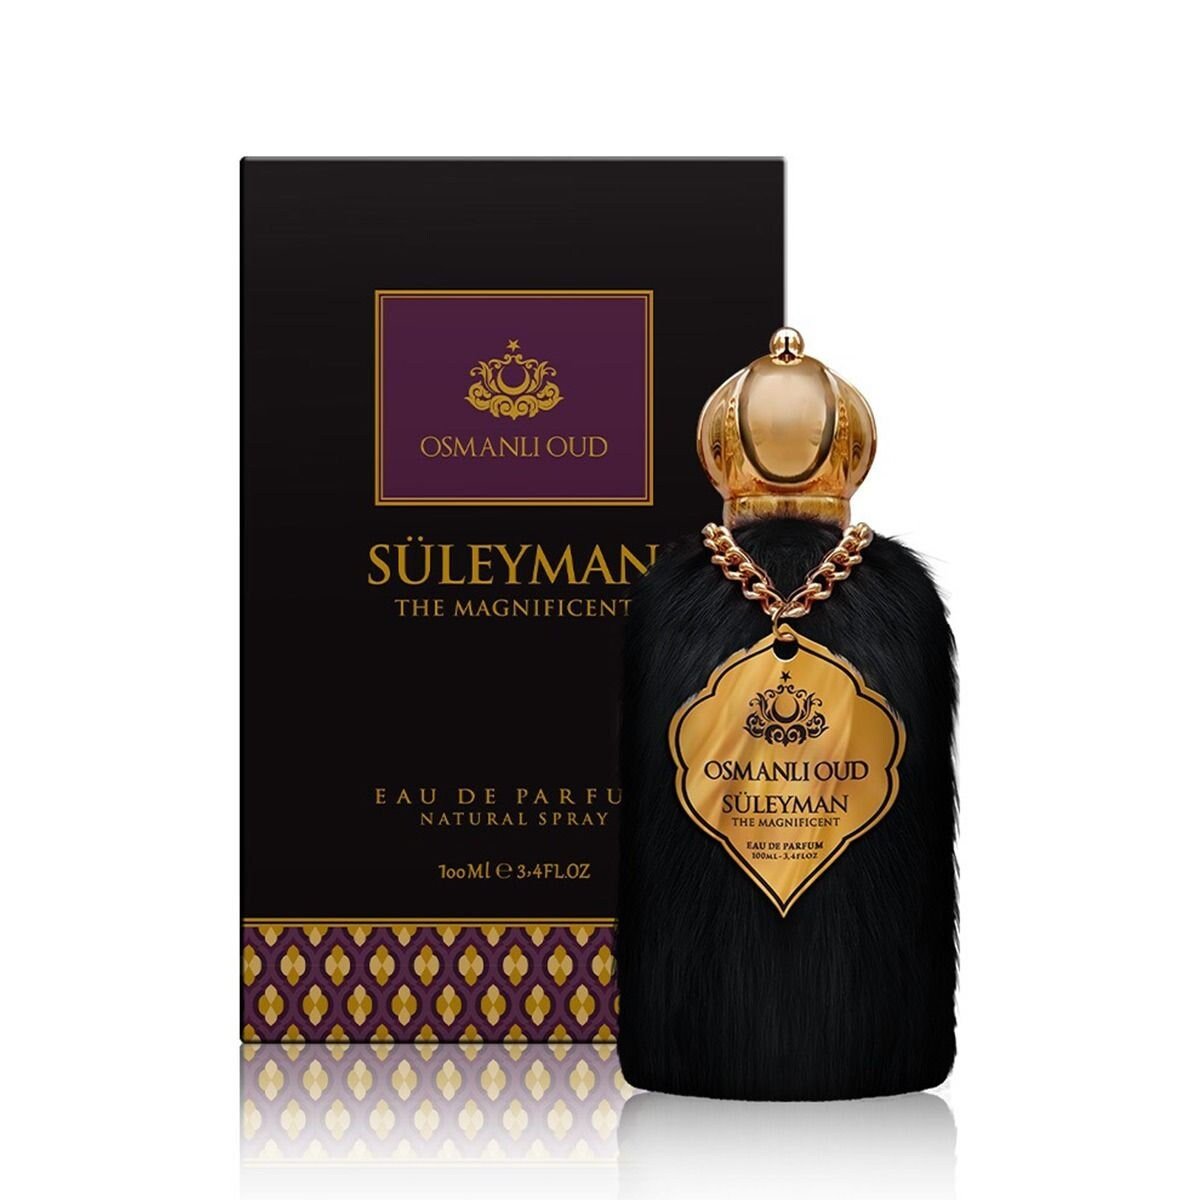 Osmanli Oud Hurrem Original Perfume, Womens The Magnificent Century Hurrem The Cheerfull Edp Perfume for Womens,100 ml Ottoman Oud - Turkish TV Series